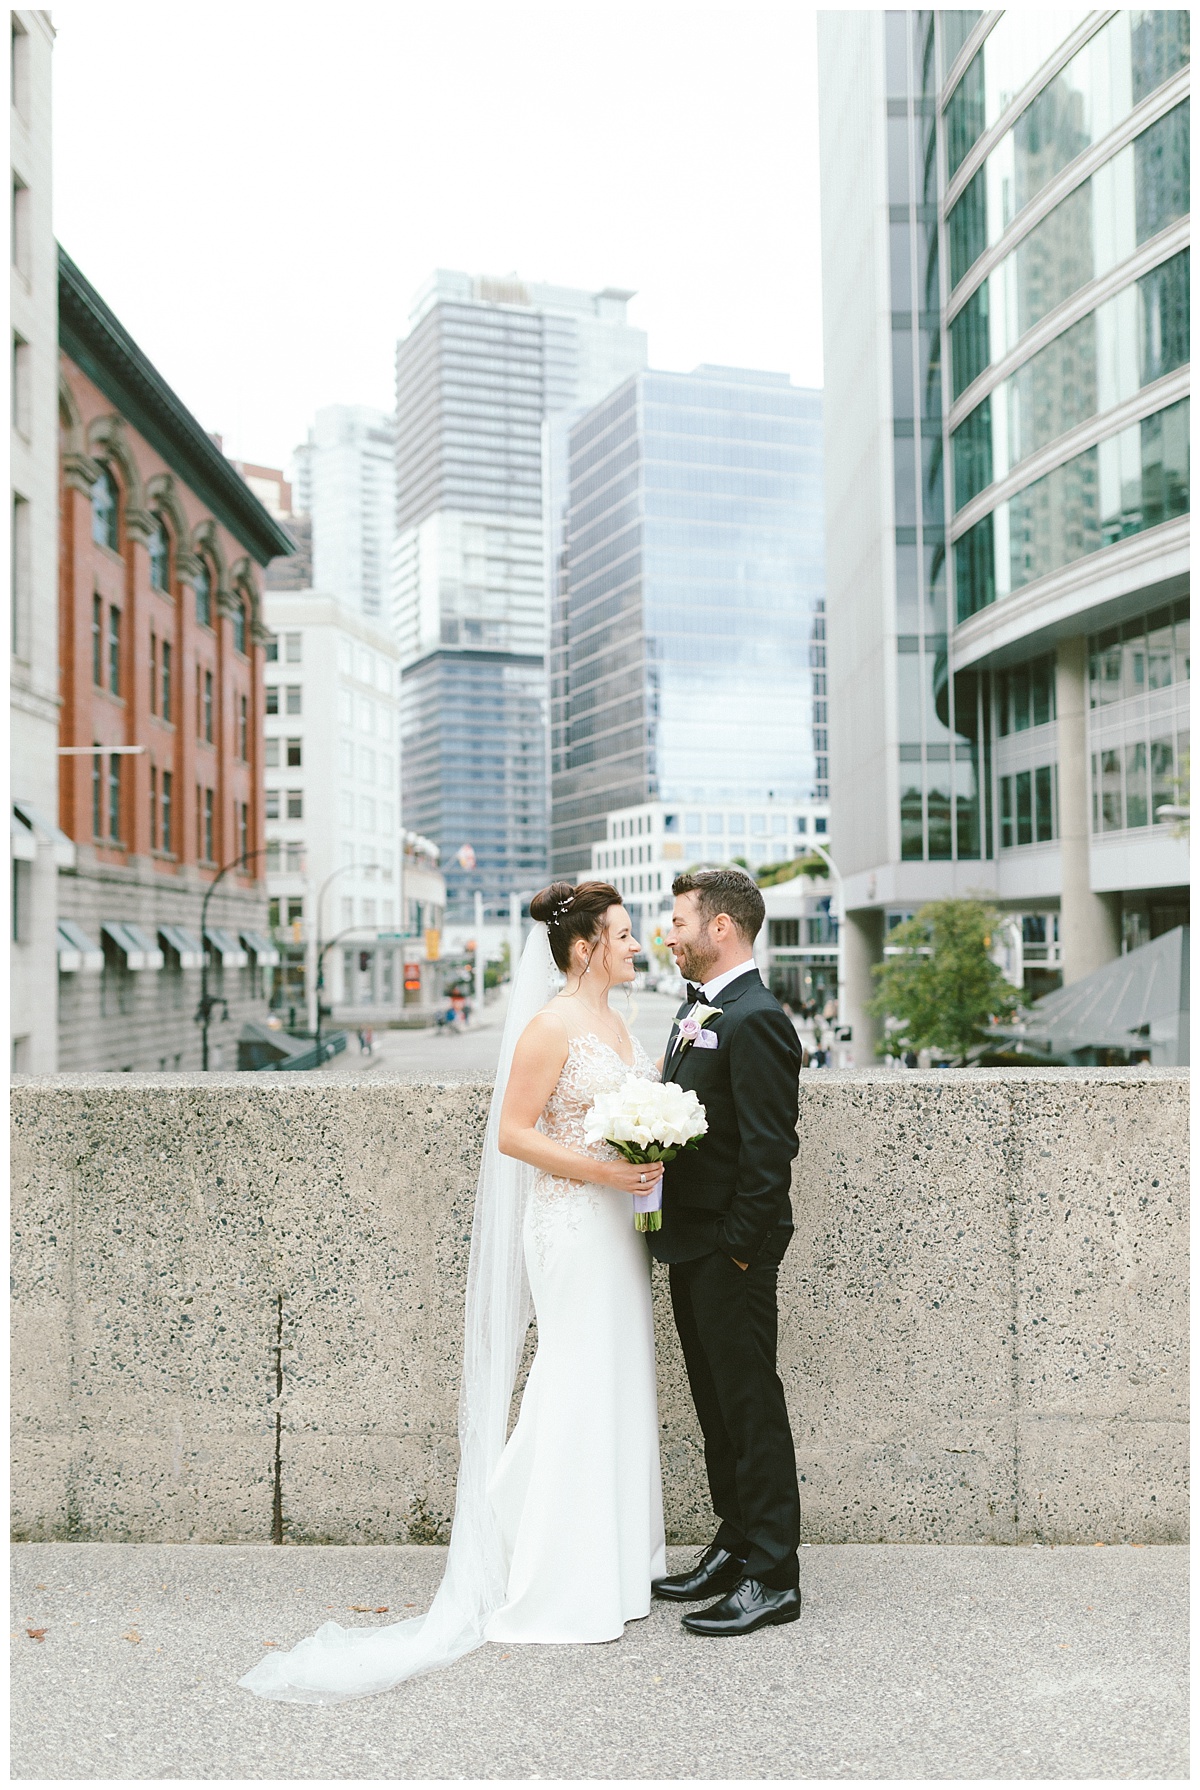  Wedding prewedding photos downtown Vancouver BC (Gastown) 